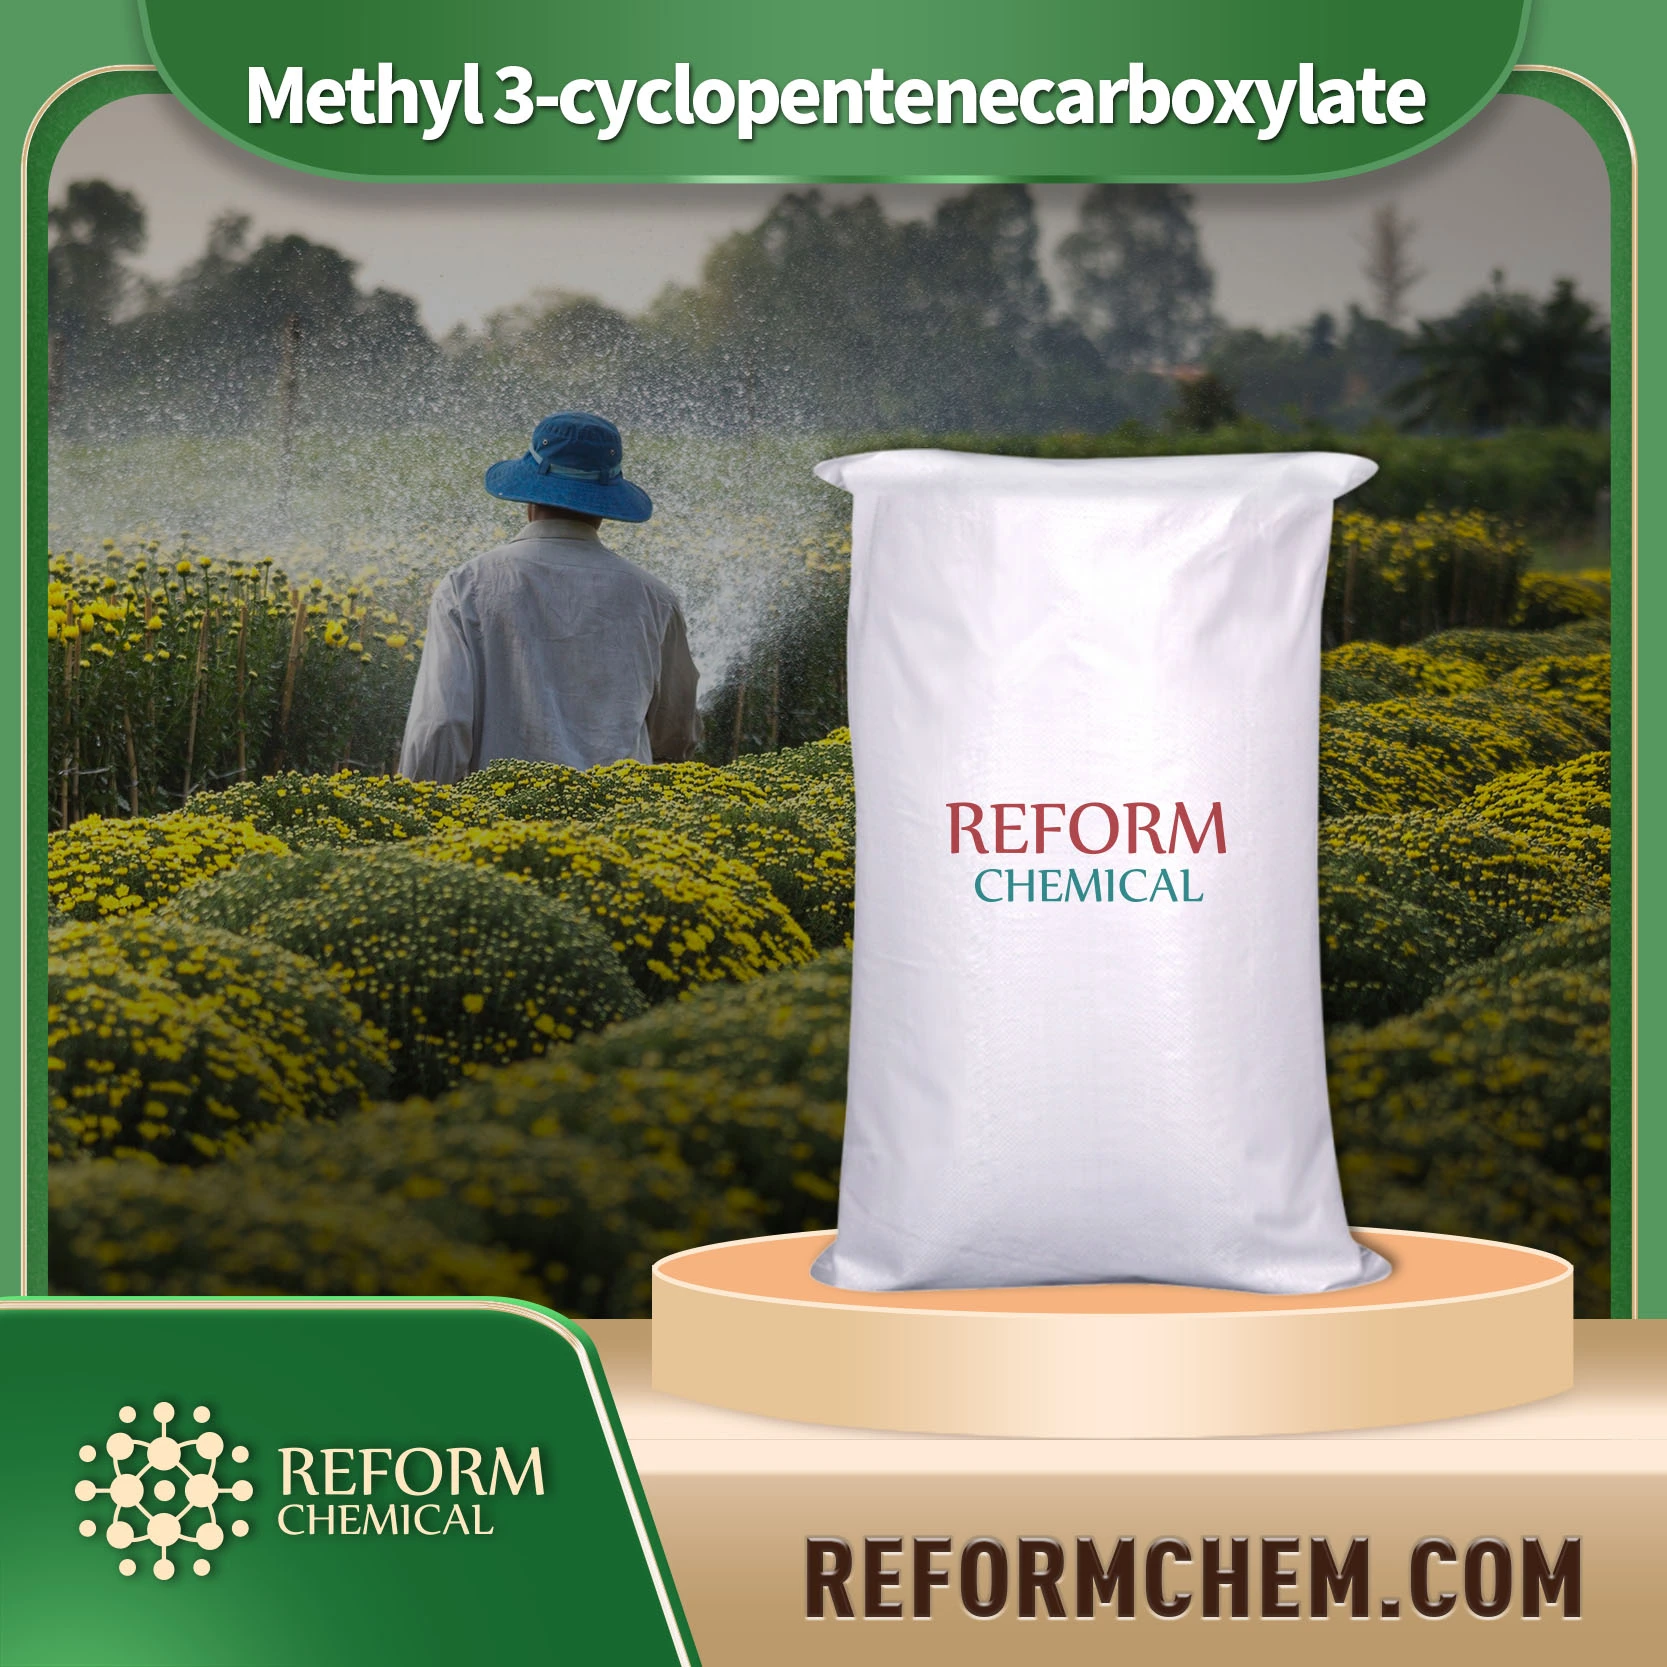 Methyl 3-cyclopentenecarboxylate